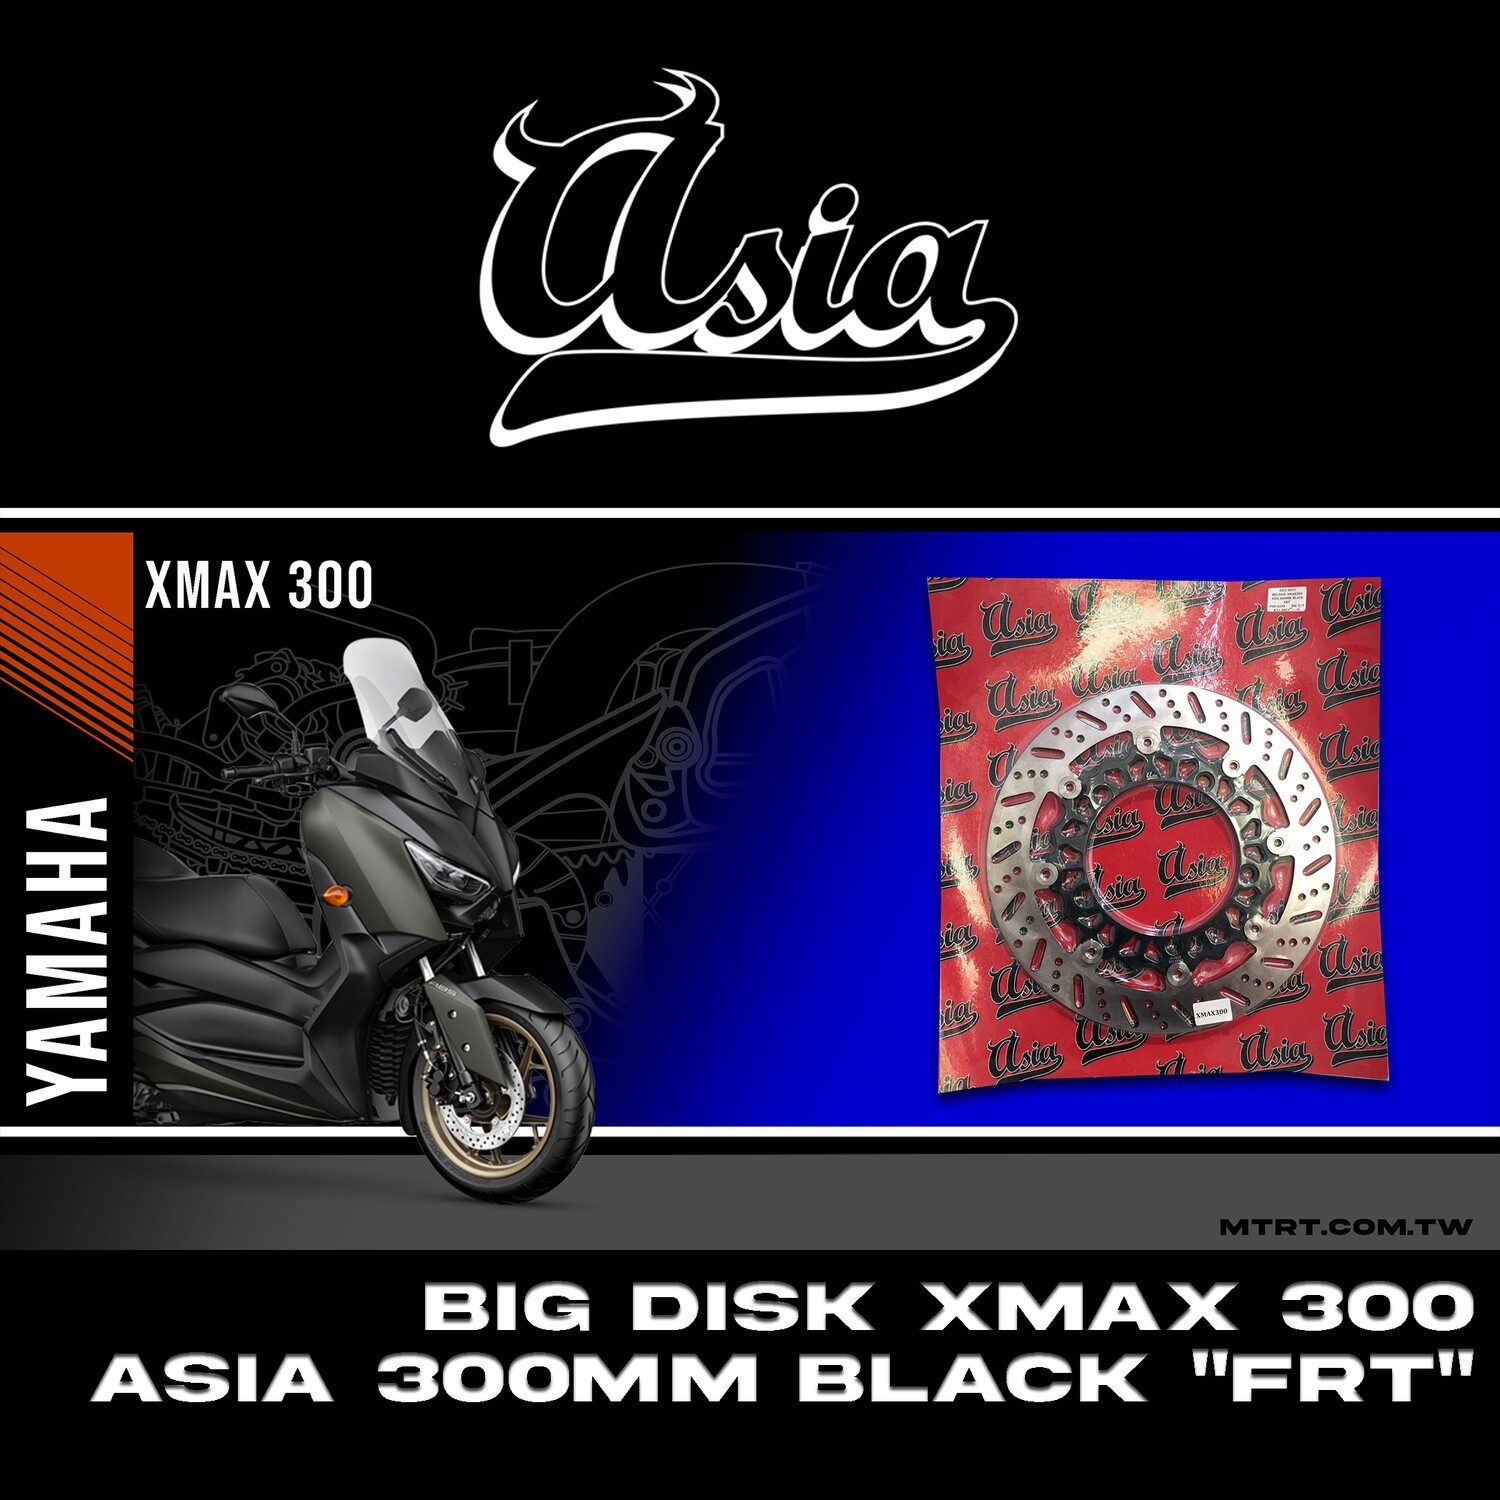 Big Disk Xmax 300 Asia 300mm Black "FRT"